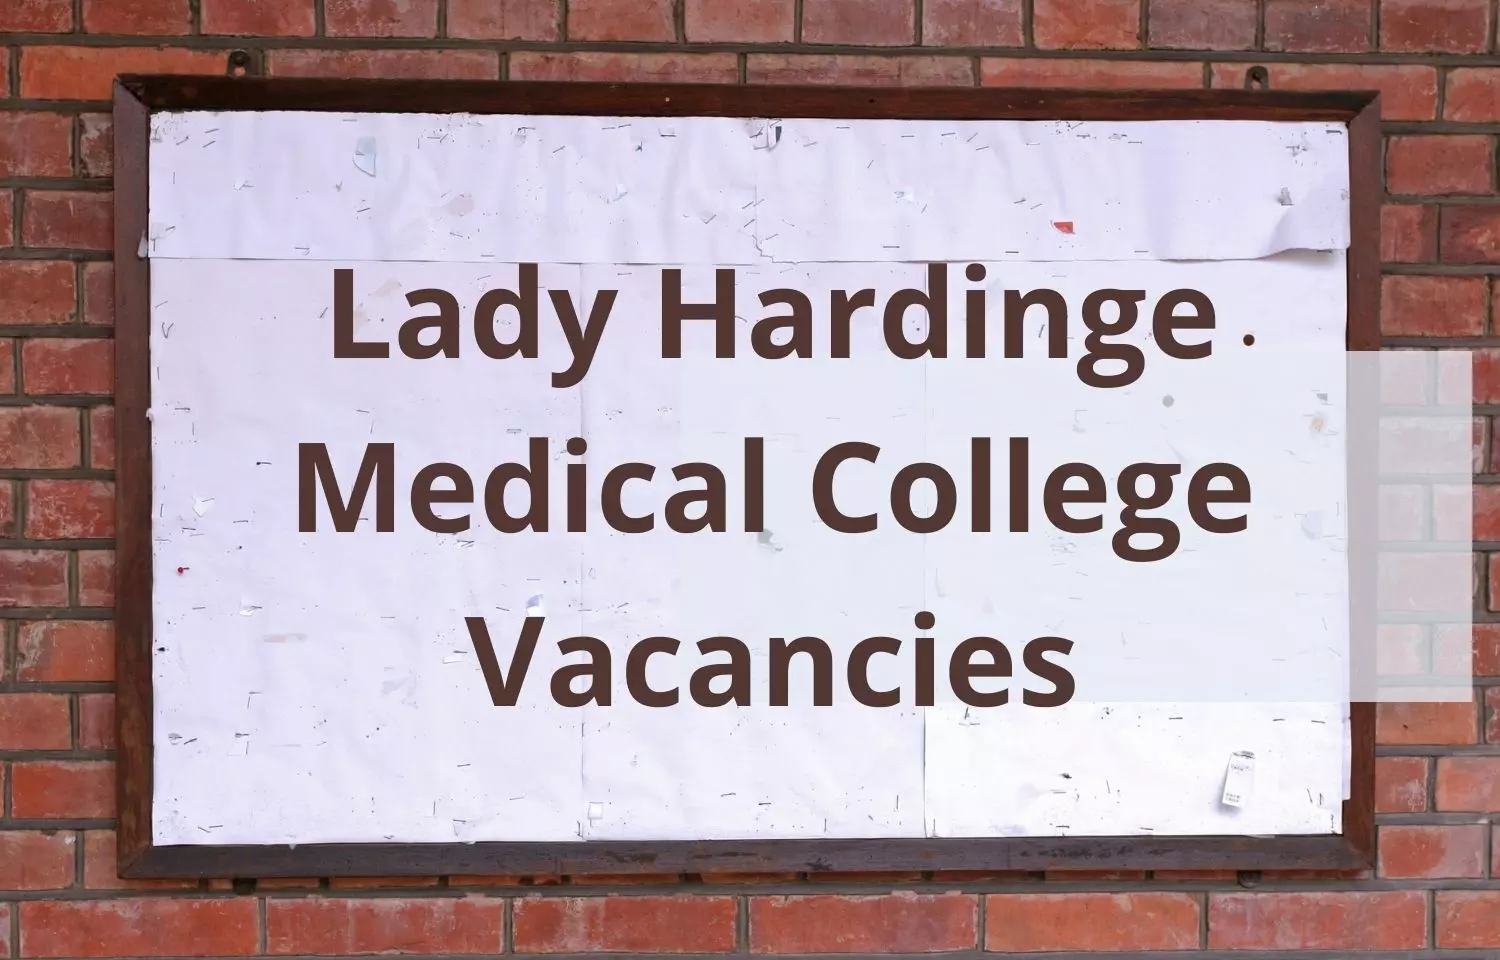 APPLY NOW At Lady Hardinge Medical College Delhi for Senior Resident Post Vacancies, Details